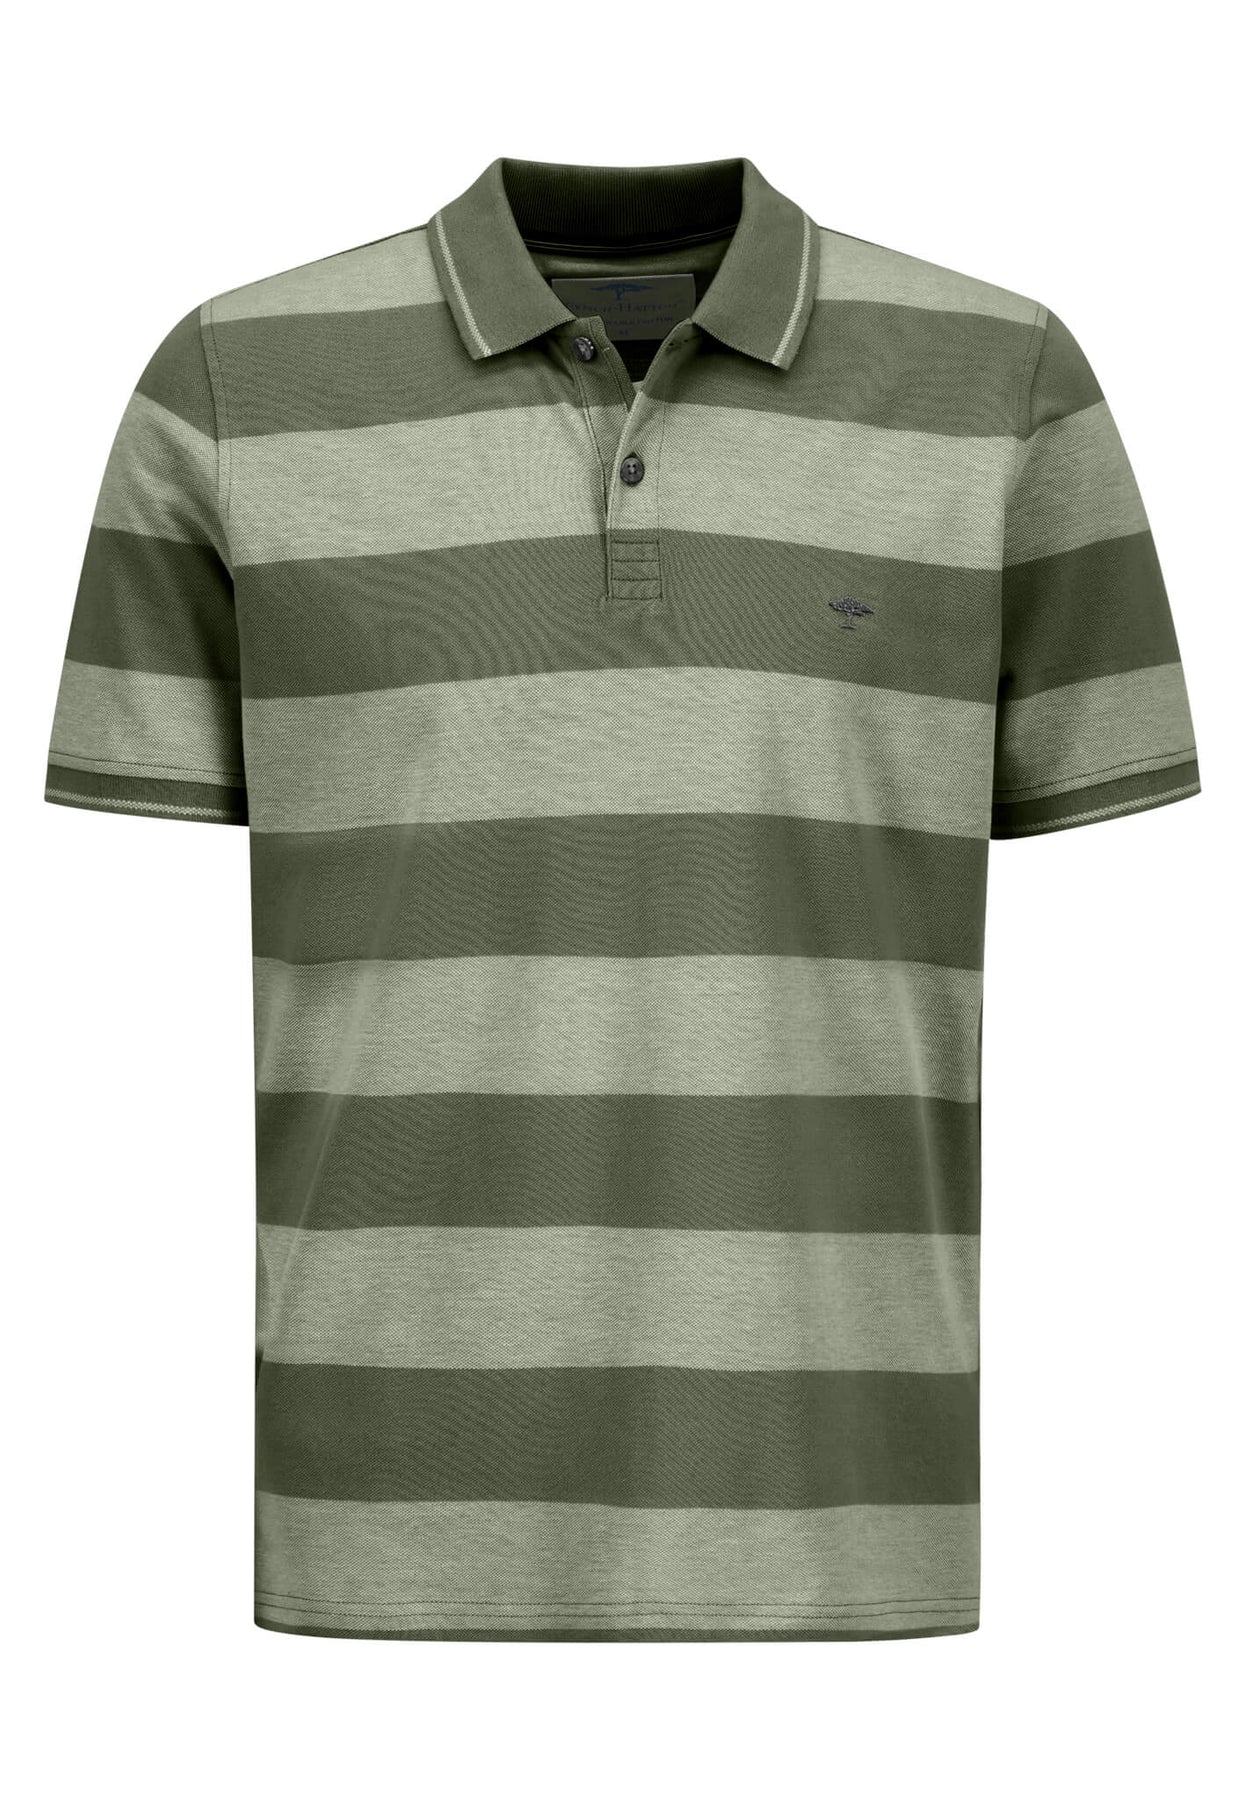 Fynch Hatton Two Tone Stripe Polo Shirt - Olive